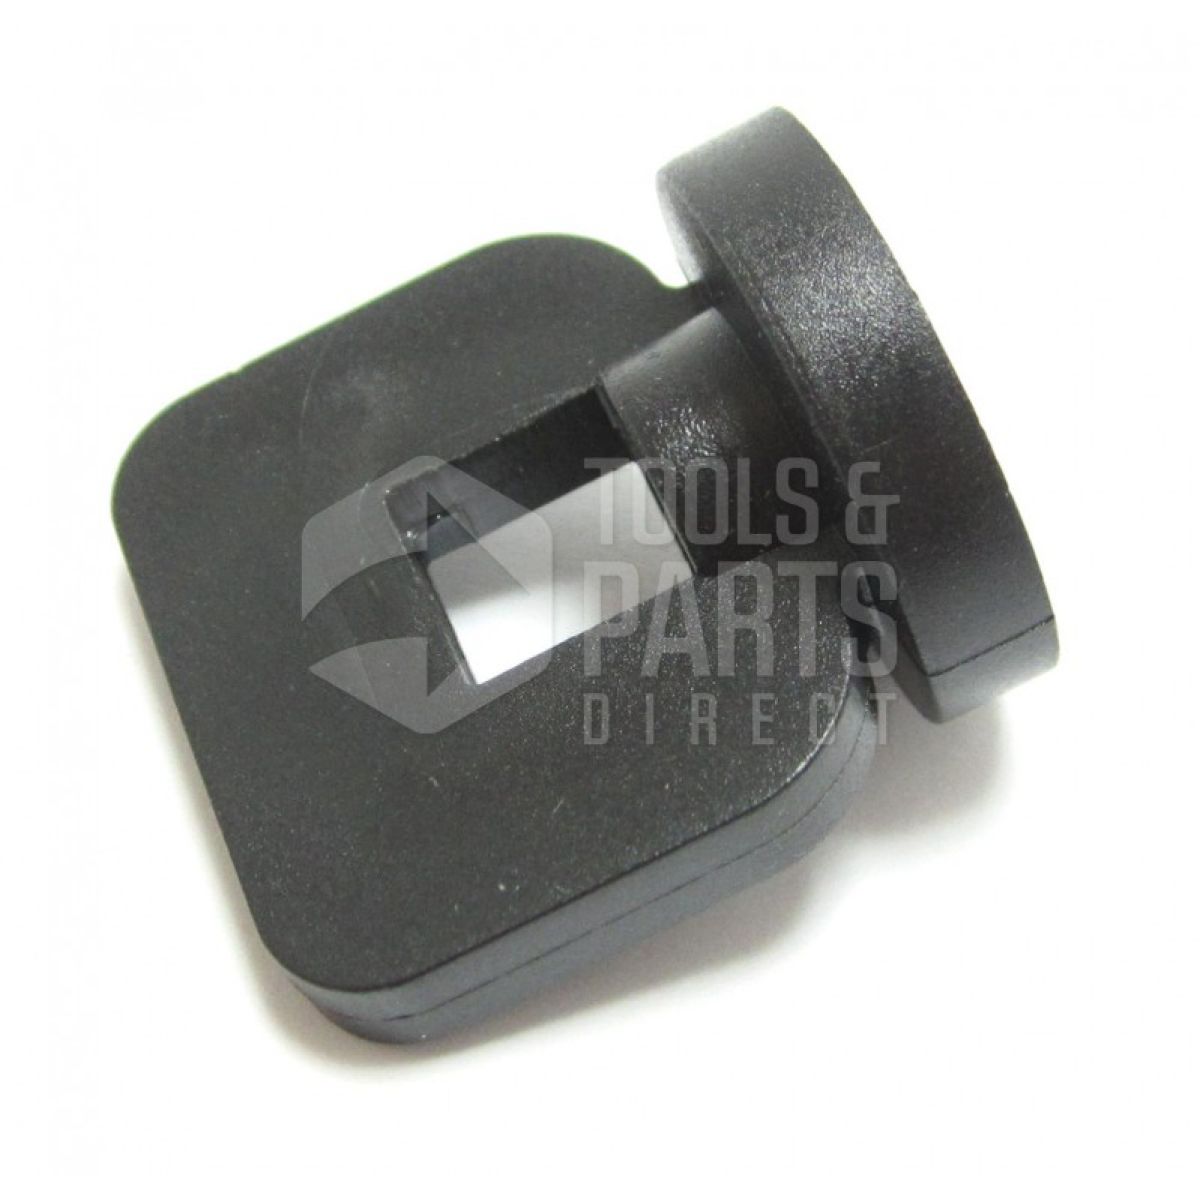 Black & Decker Pp360 Screwdriver (Type 1) Spare Parts Spare Parts